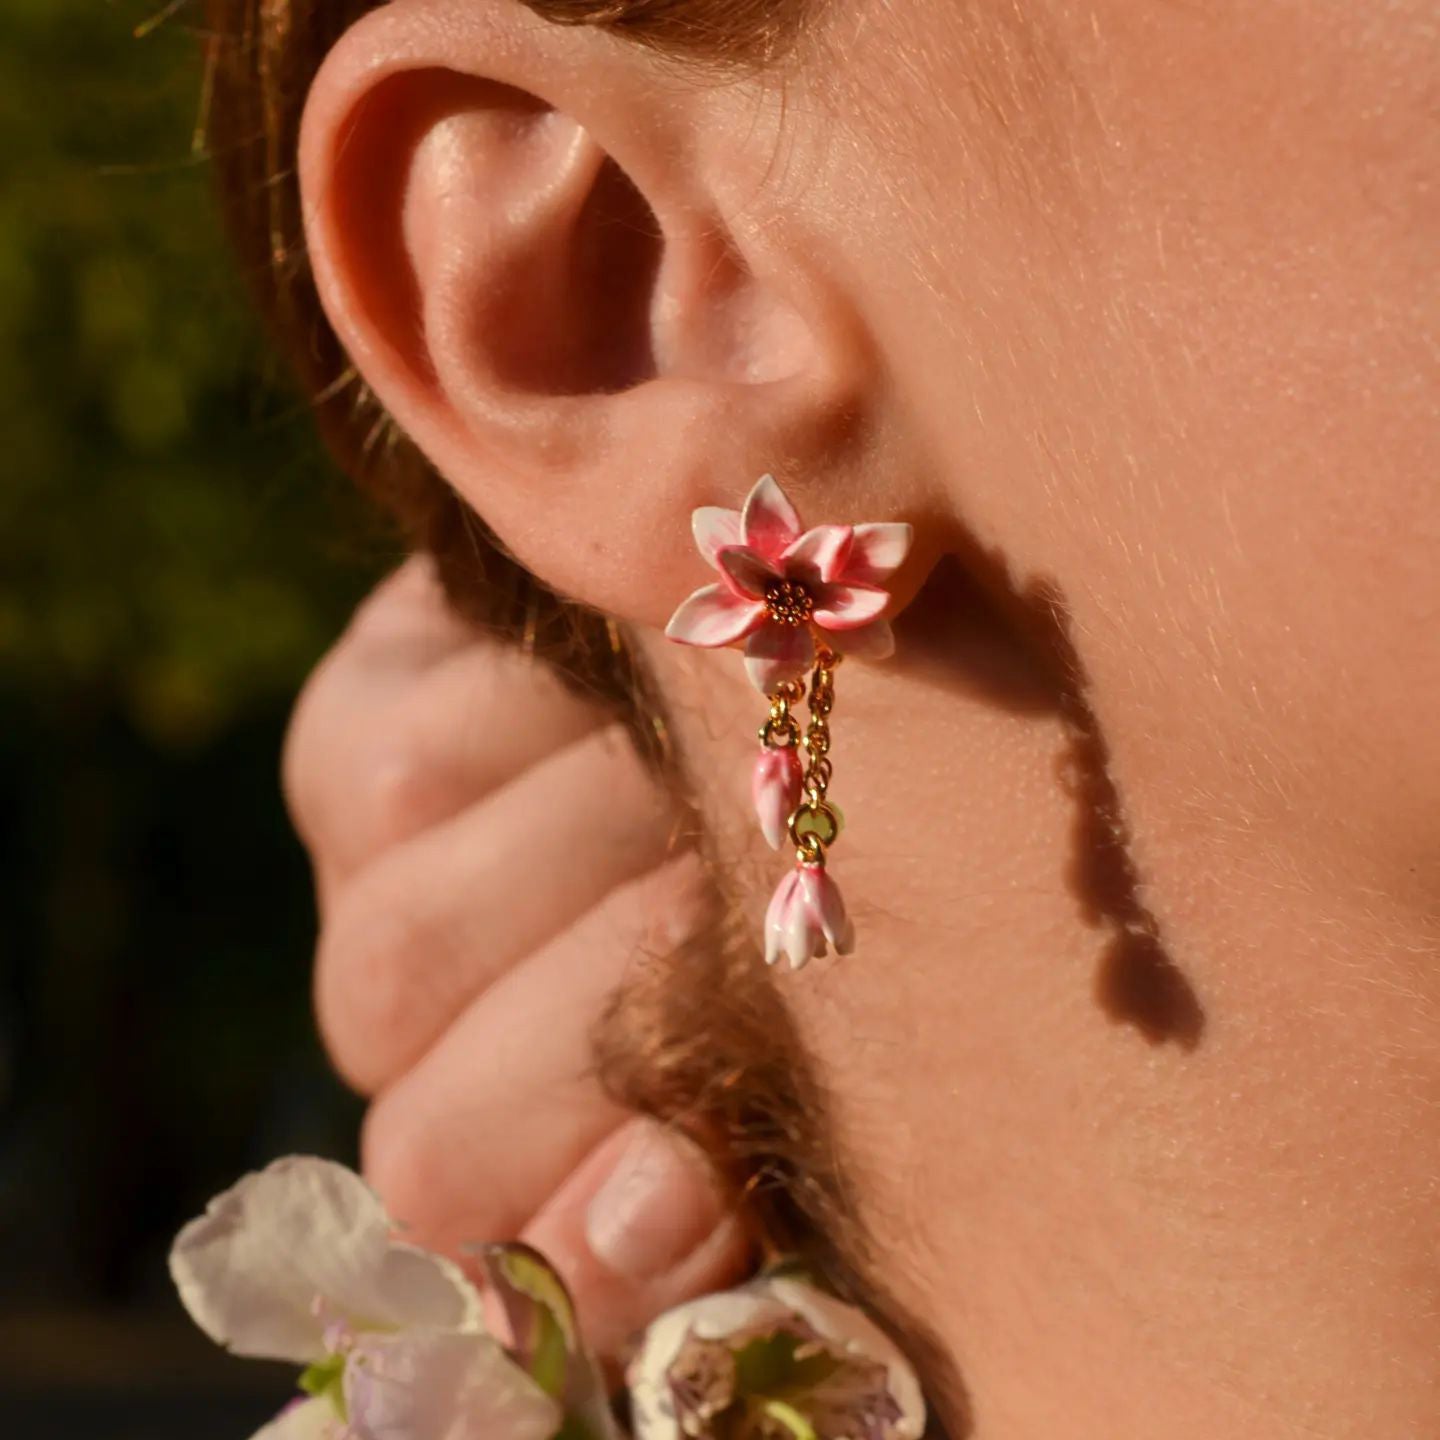 magnolia earrings for influencer